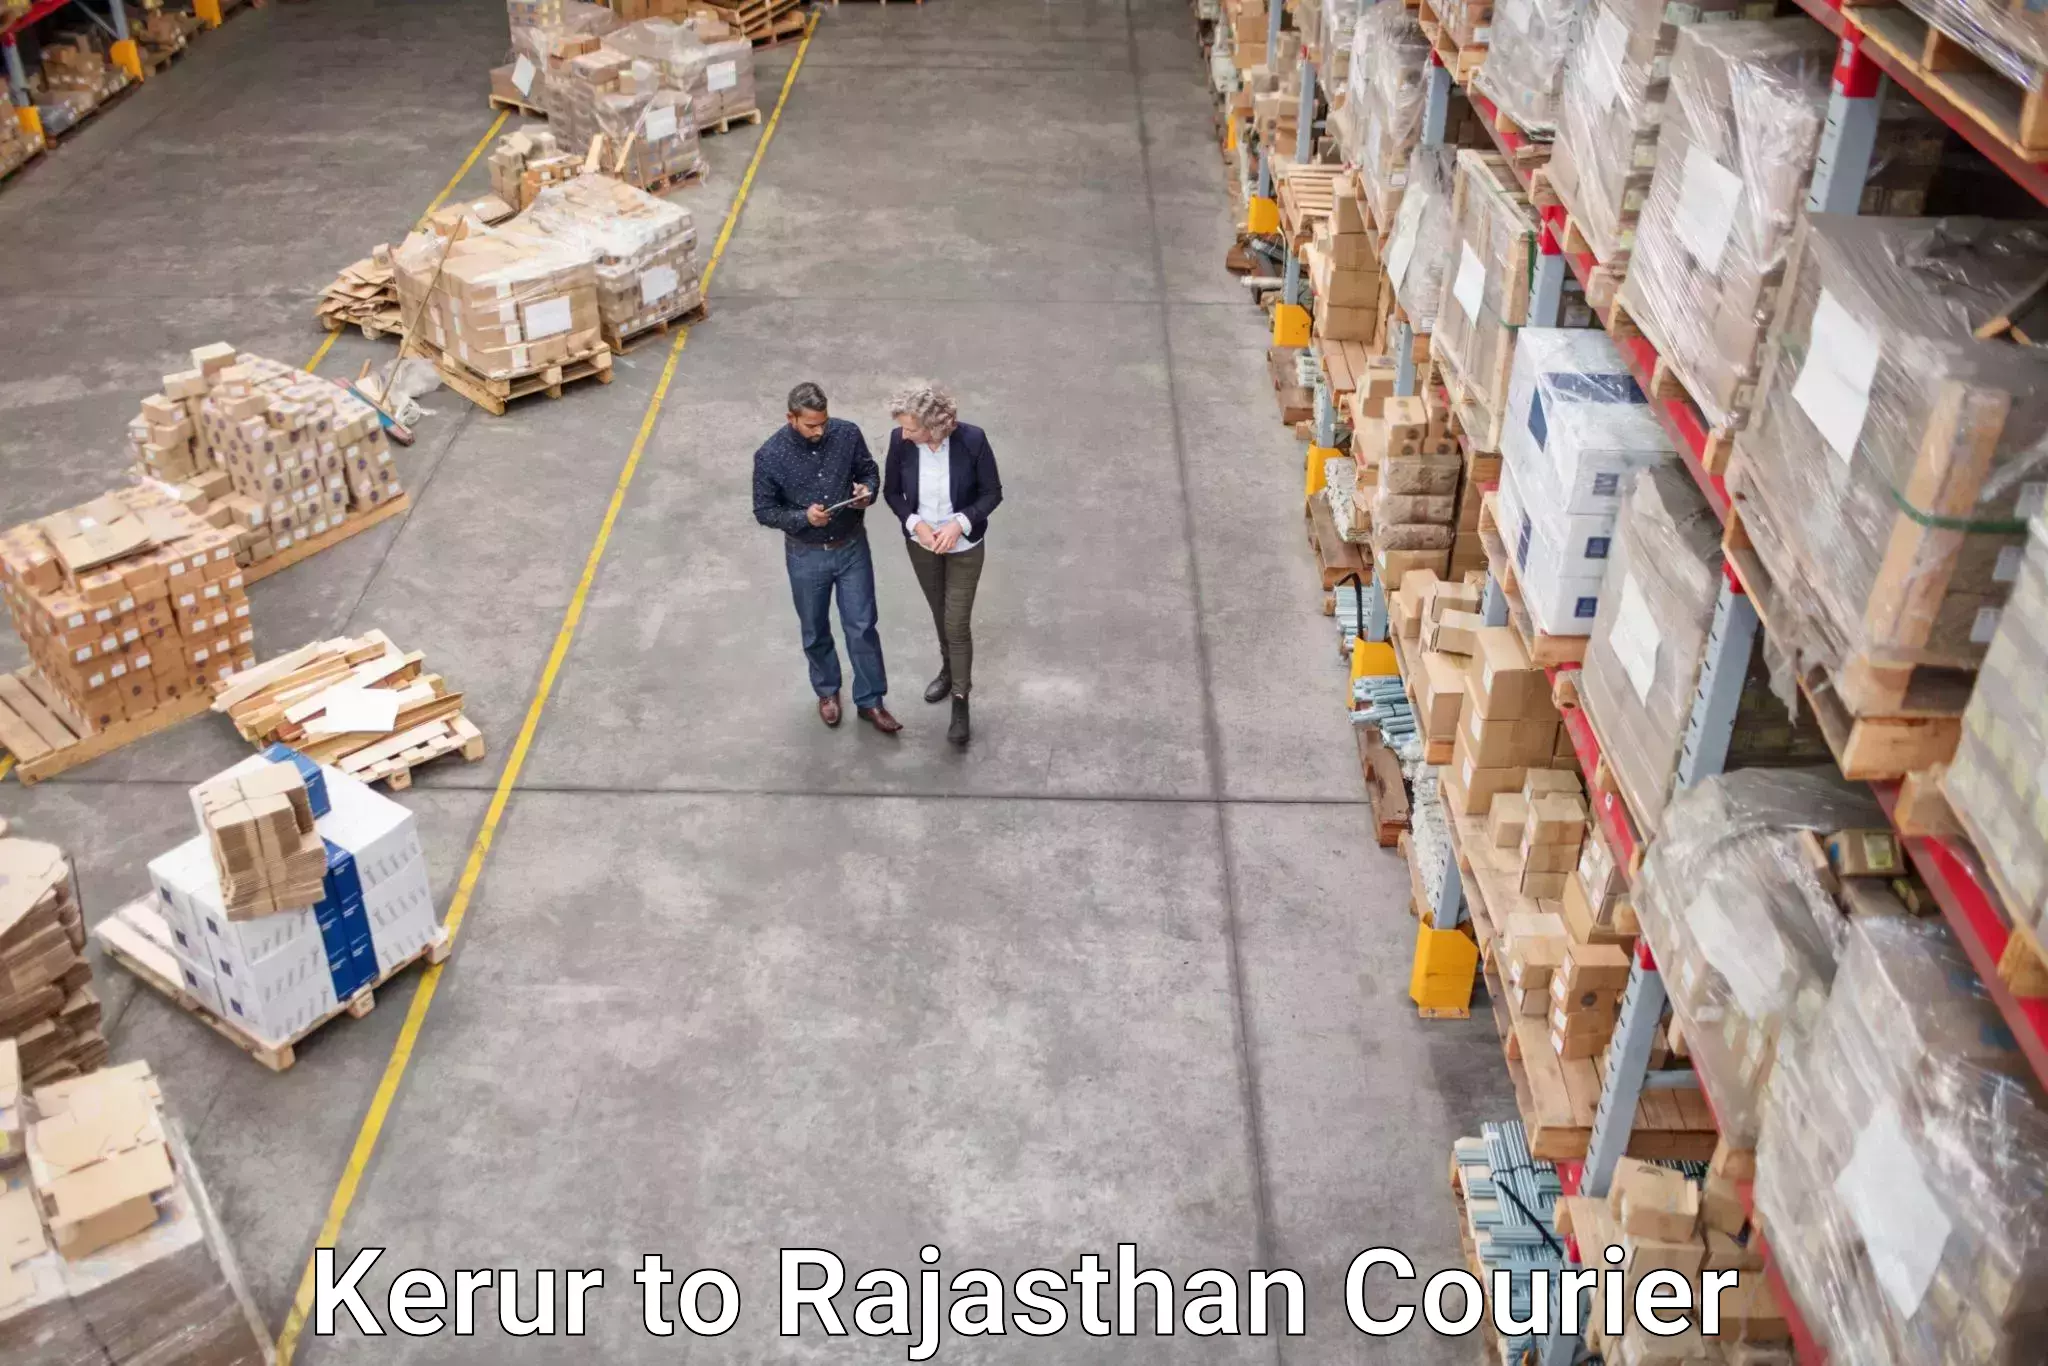 Sustainable shipping practices Kerur to Mandalgarh